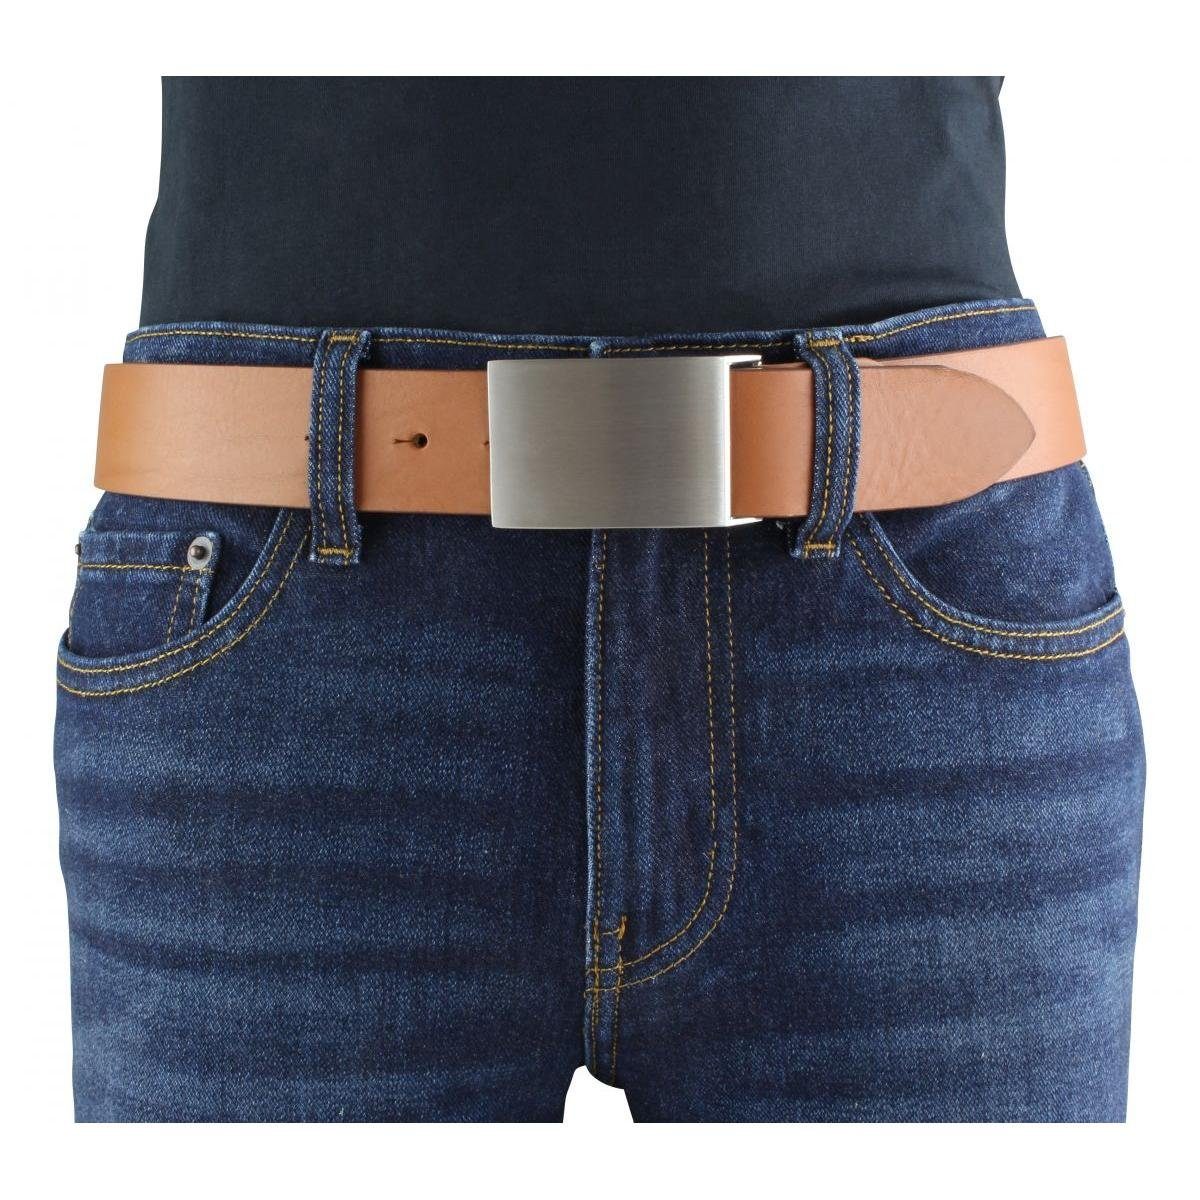 Ledergürtel für aus Herren - cm Braun, Jeans-Gürtel Silber 4,0 - 40mm BELTINGER Vollrindleder Gürtel Jeans